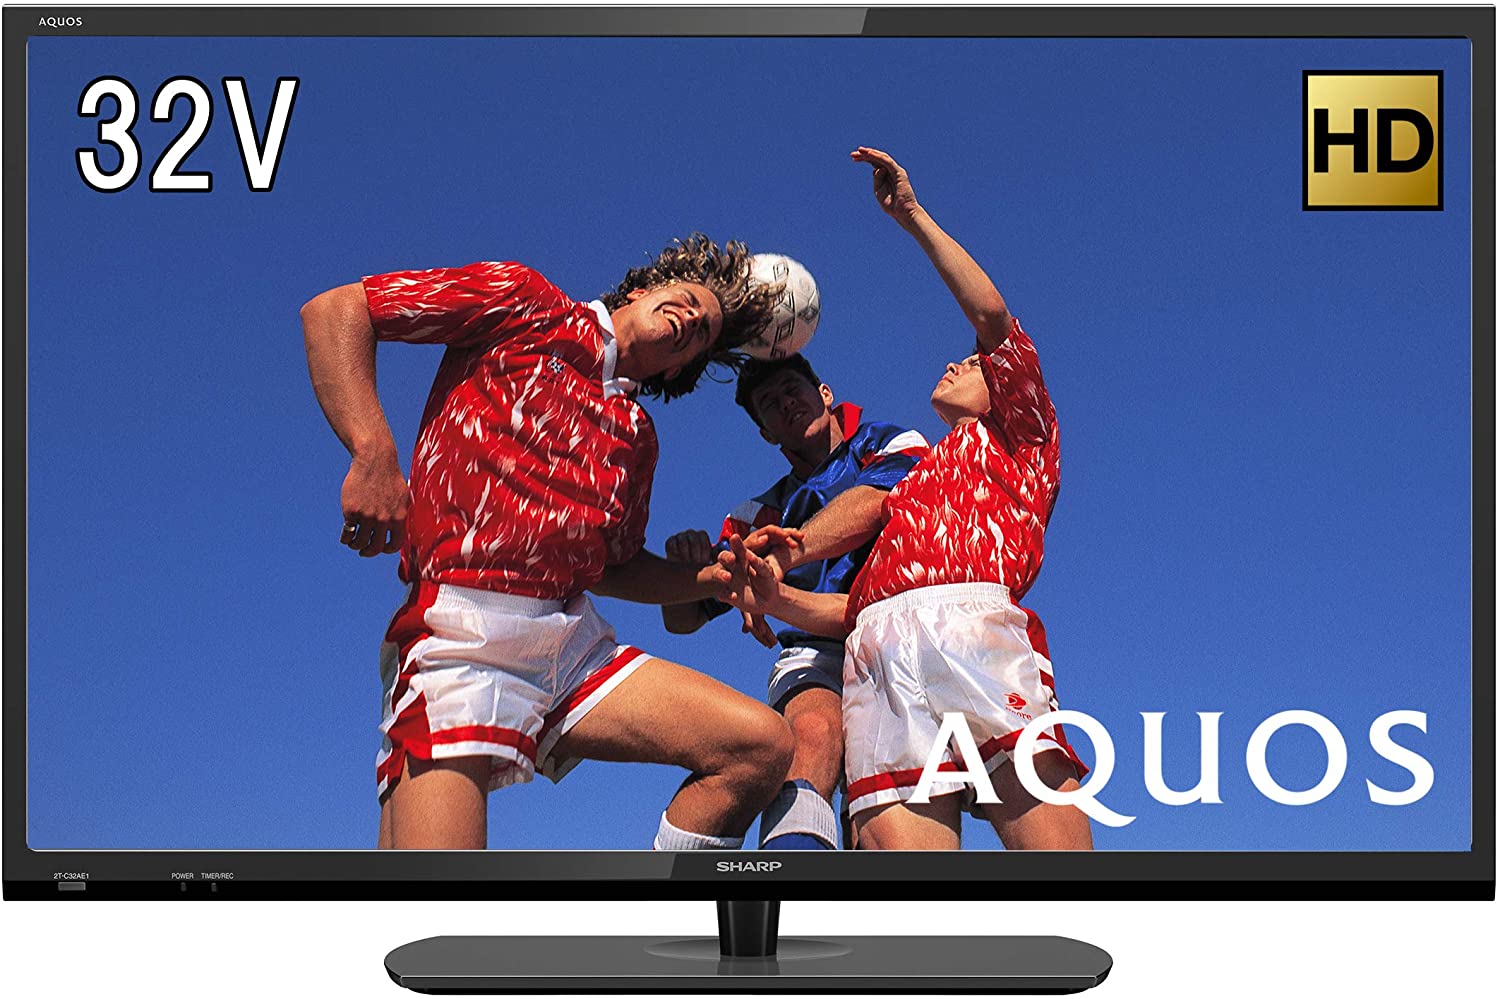 32v型テレビ購入 Sharp Aquos 2t C32ae1 ハードオフ ブックオフ ジャンクオーディオ三昧 楽天ブログ